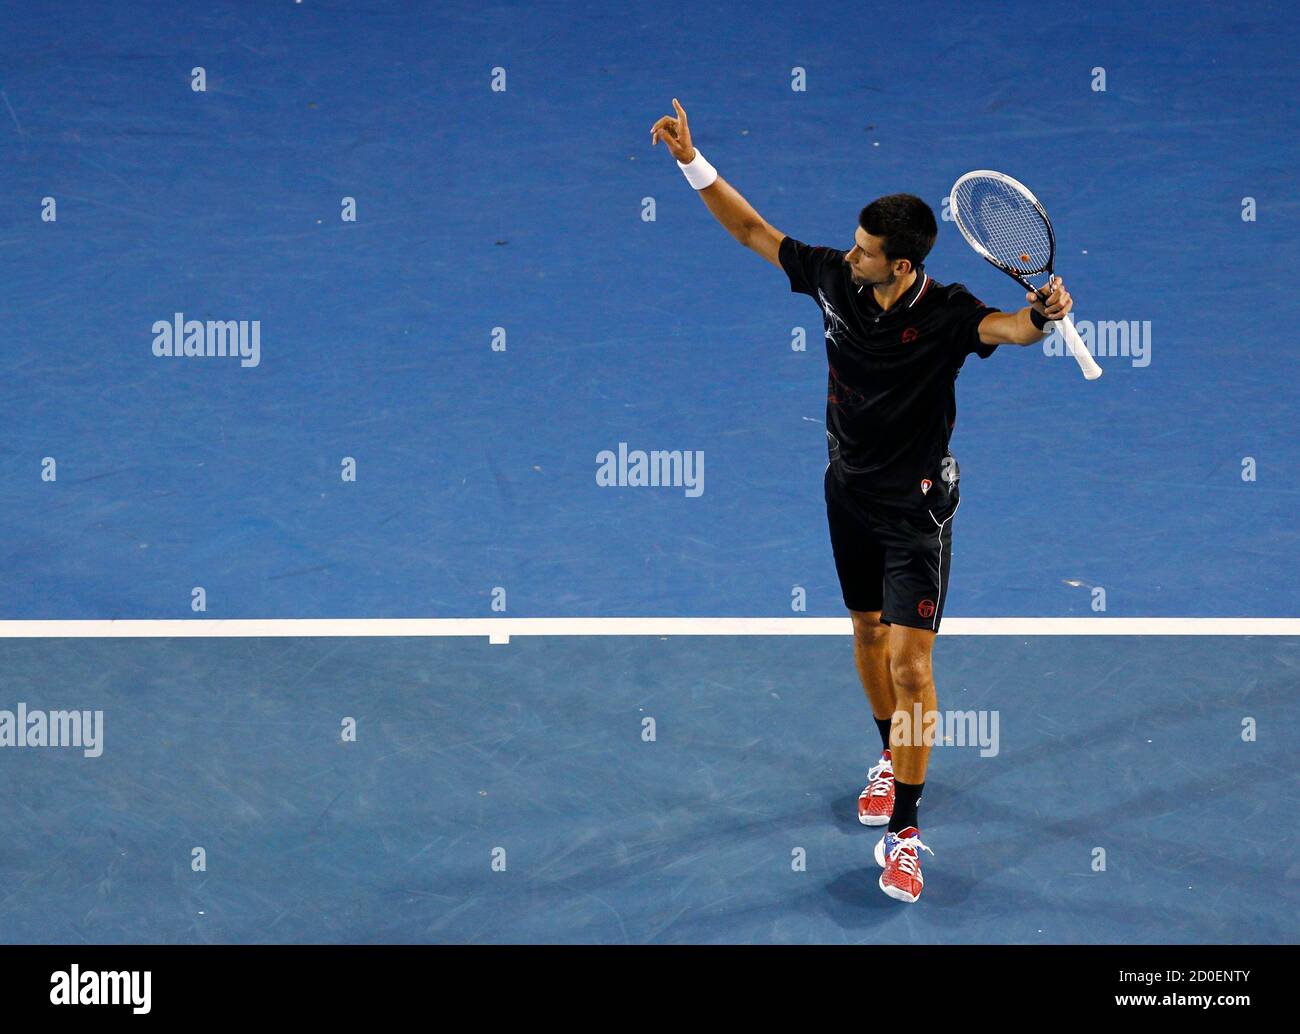 Drama Arbejdsløs Instrument Novak Djokovic of Serbia celebrates defeating Lleyton Hewitt of Australia  at the Australian Open tennis tournament in Melbourne January 23, 2012.  REUTERS/Mark Blinch (AUSTRALIA - Tags: SPORT TENNIS Stock Photo - Alamy